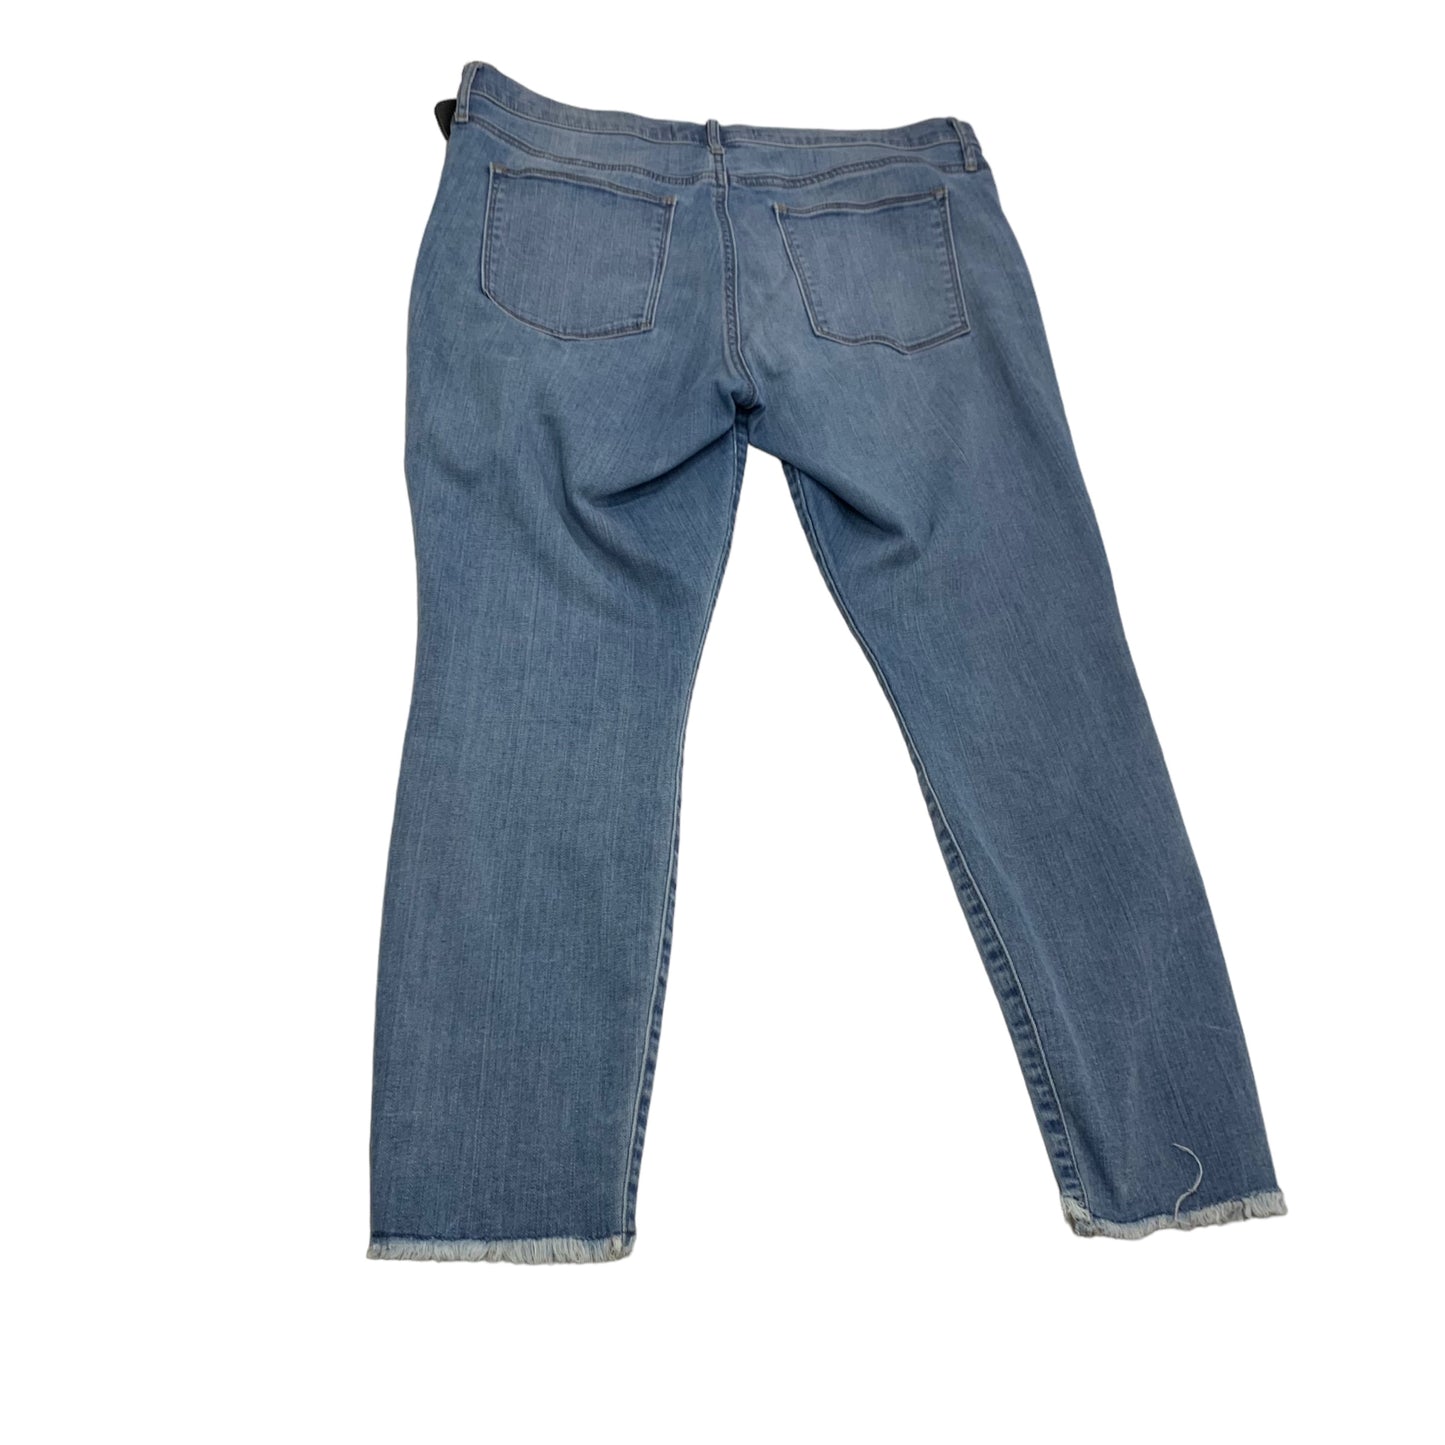 Jeans Skinny By Gap  Size: 12